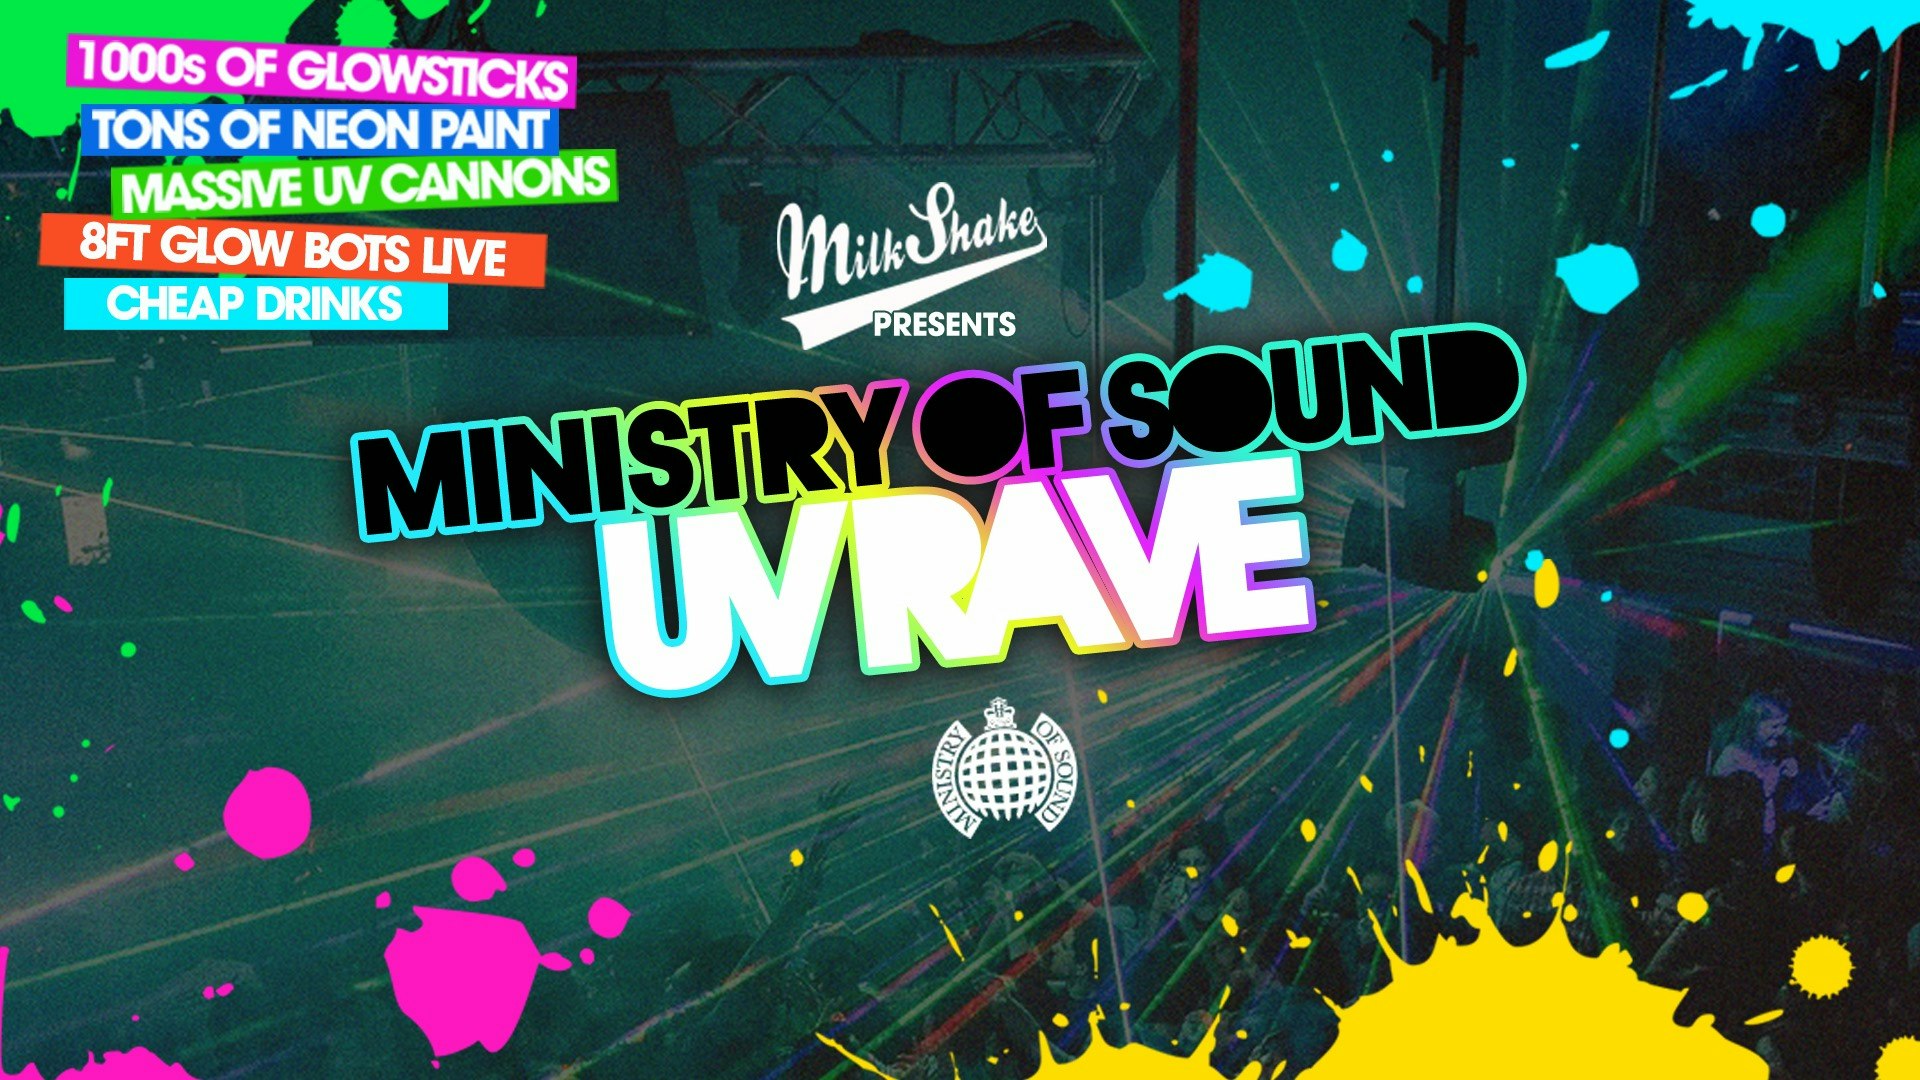 The Milkshake, Ministry of Sound UV RAVE ⚡ 2023 – 🔋 BOOK NOW 🔋